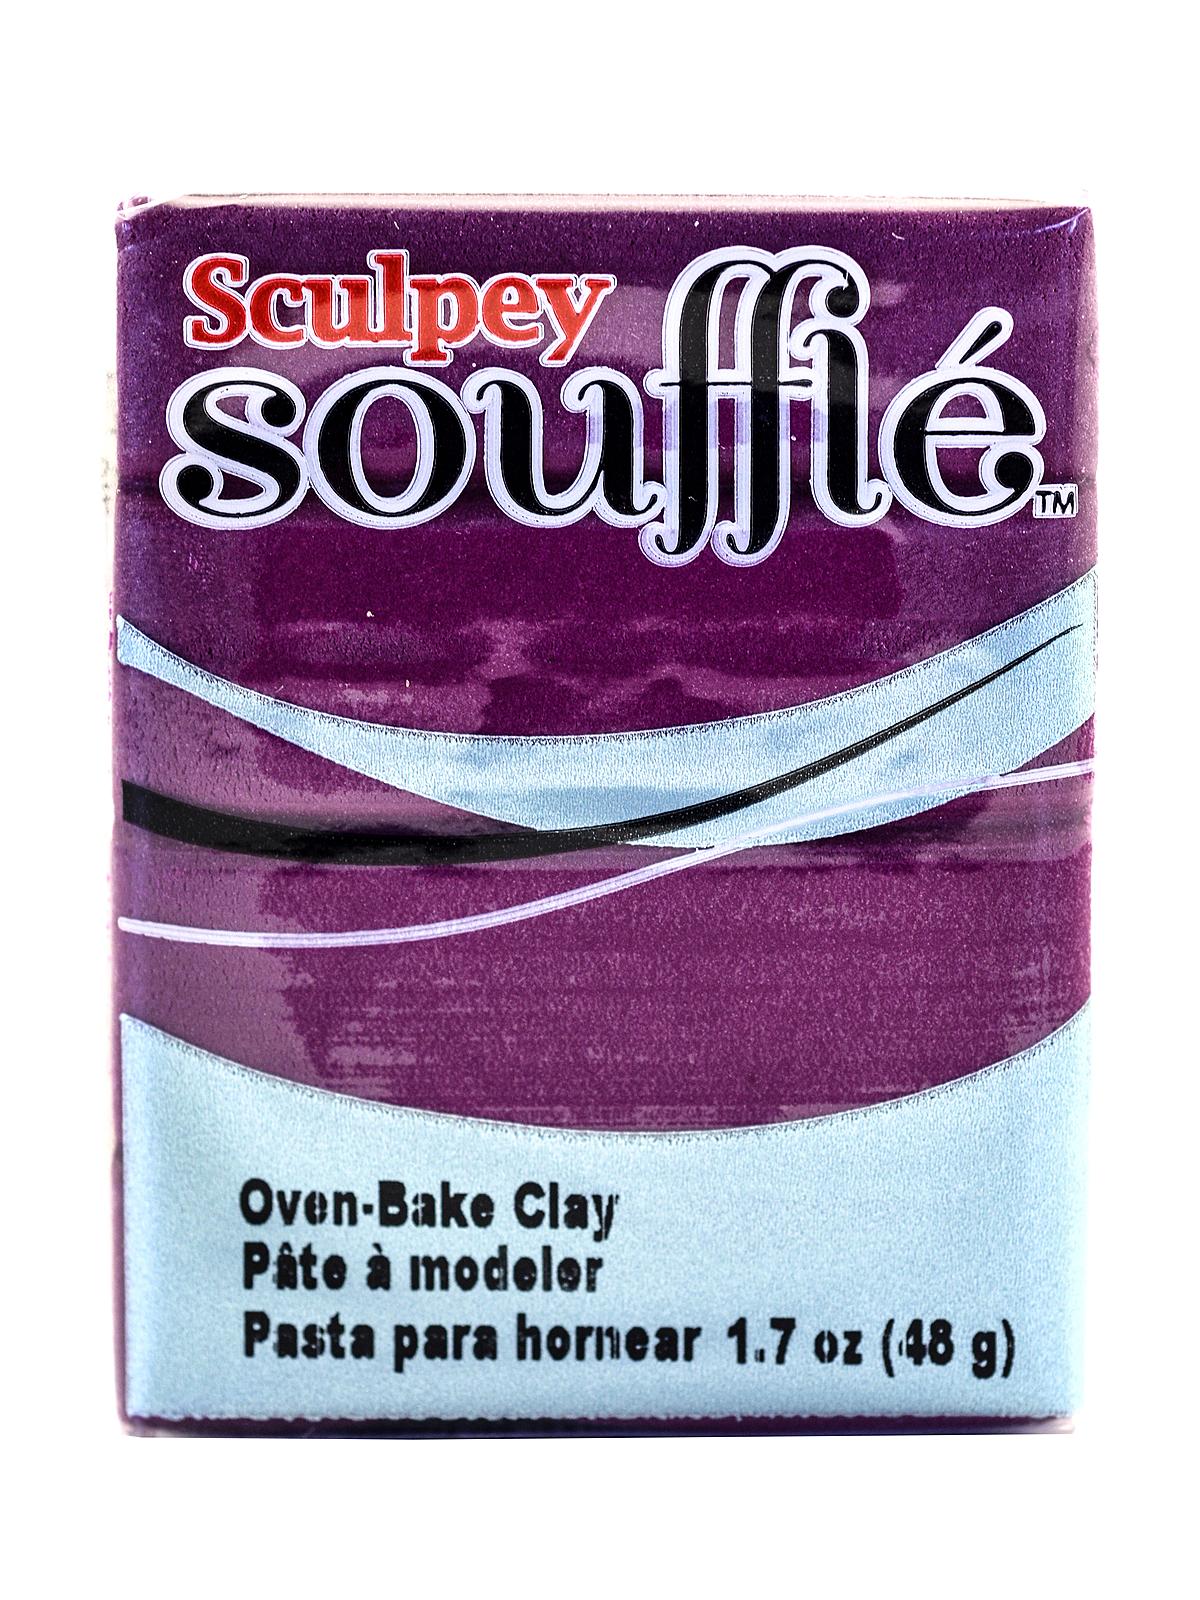 Soufflé Oven-bake Clay Turnip 1.7 Oz.